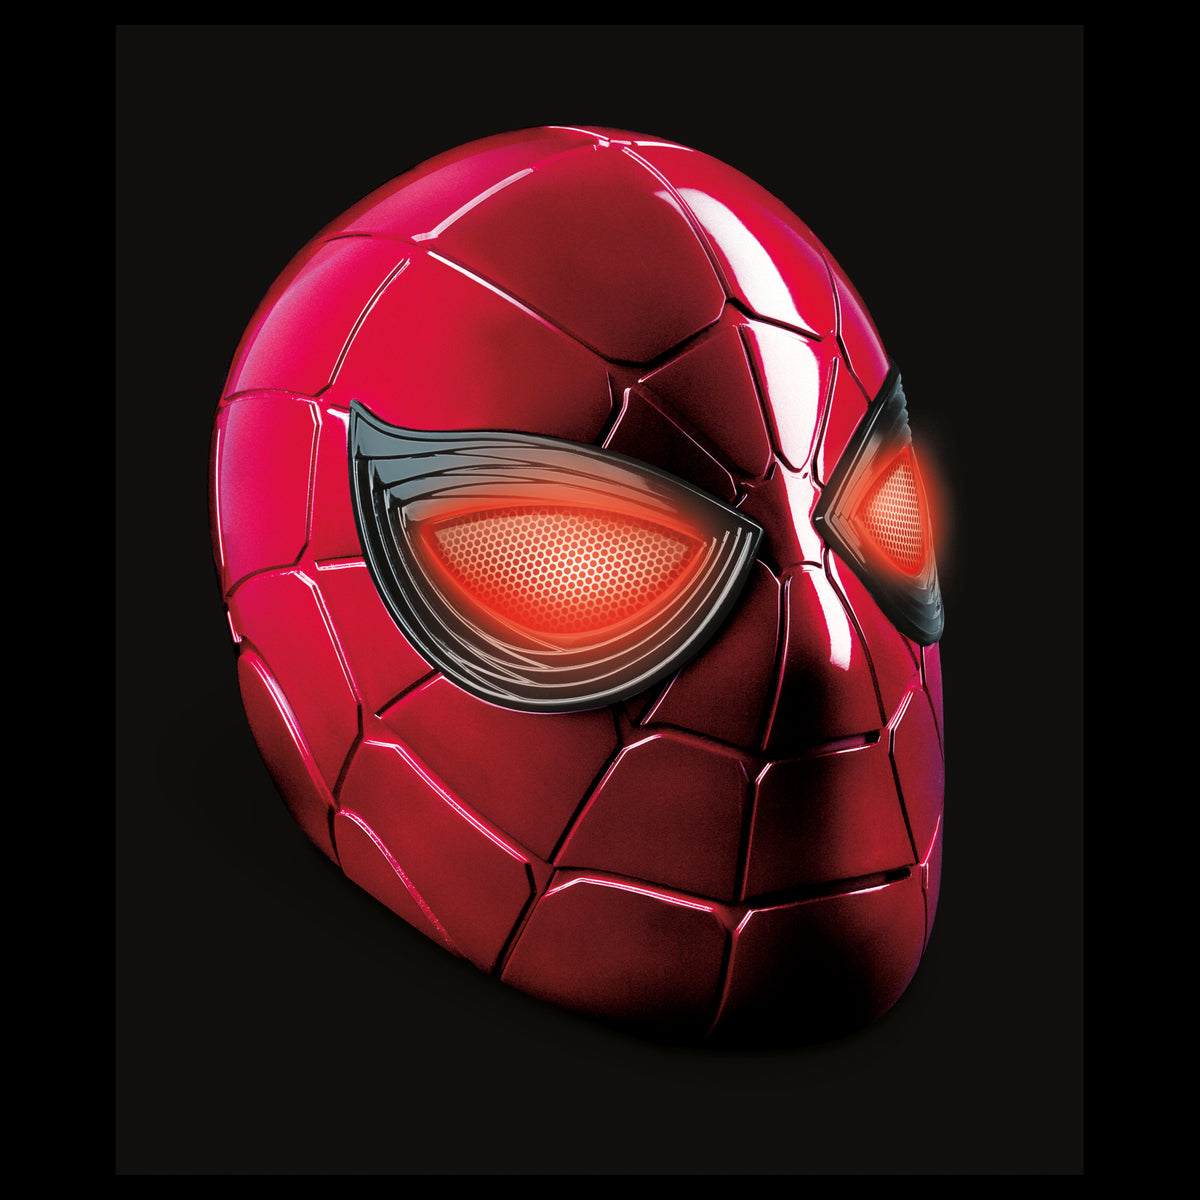 Infinity Saga Marvel Legends Star-Lord 1:1 Scale Wearable Helmet